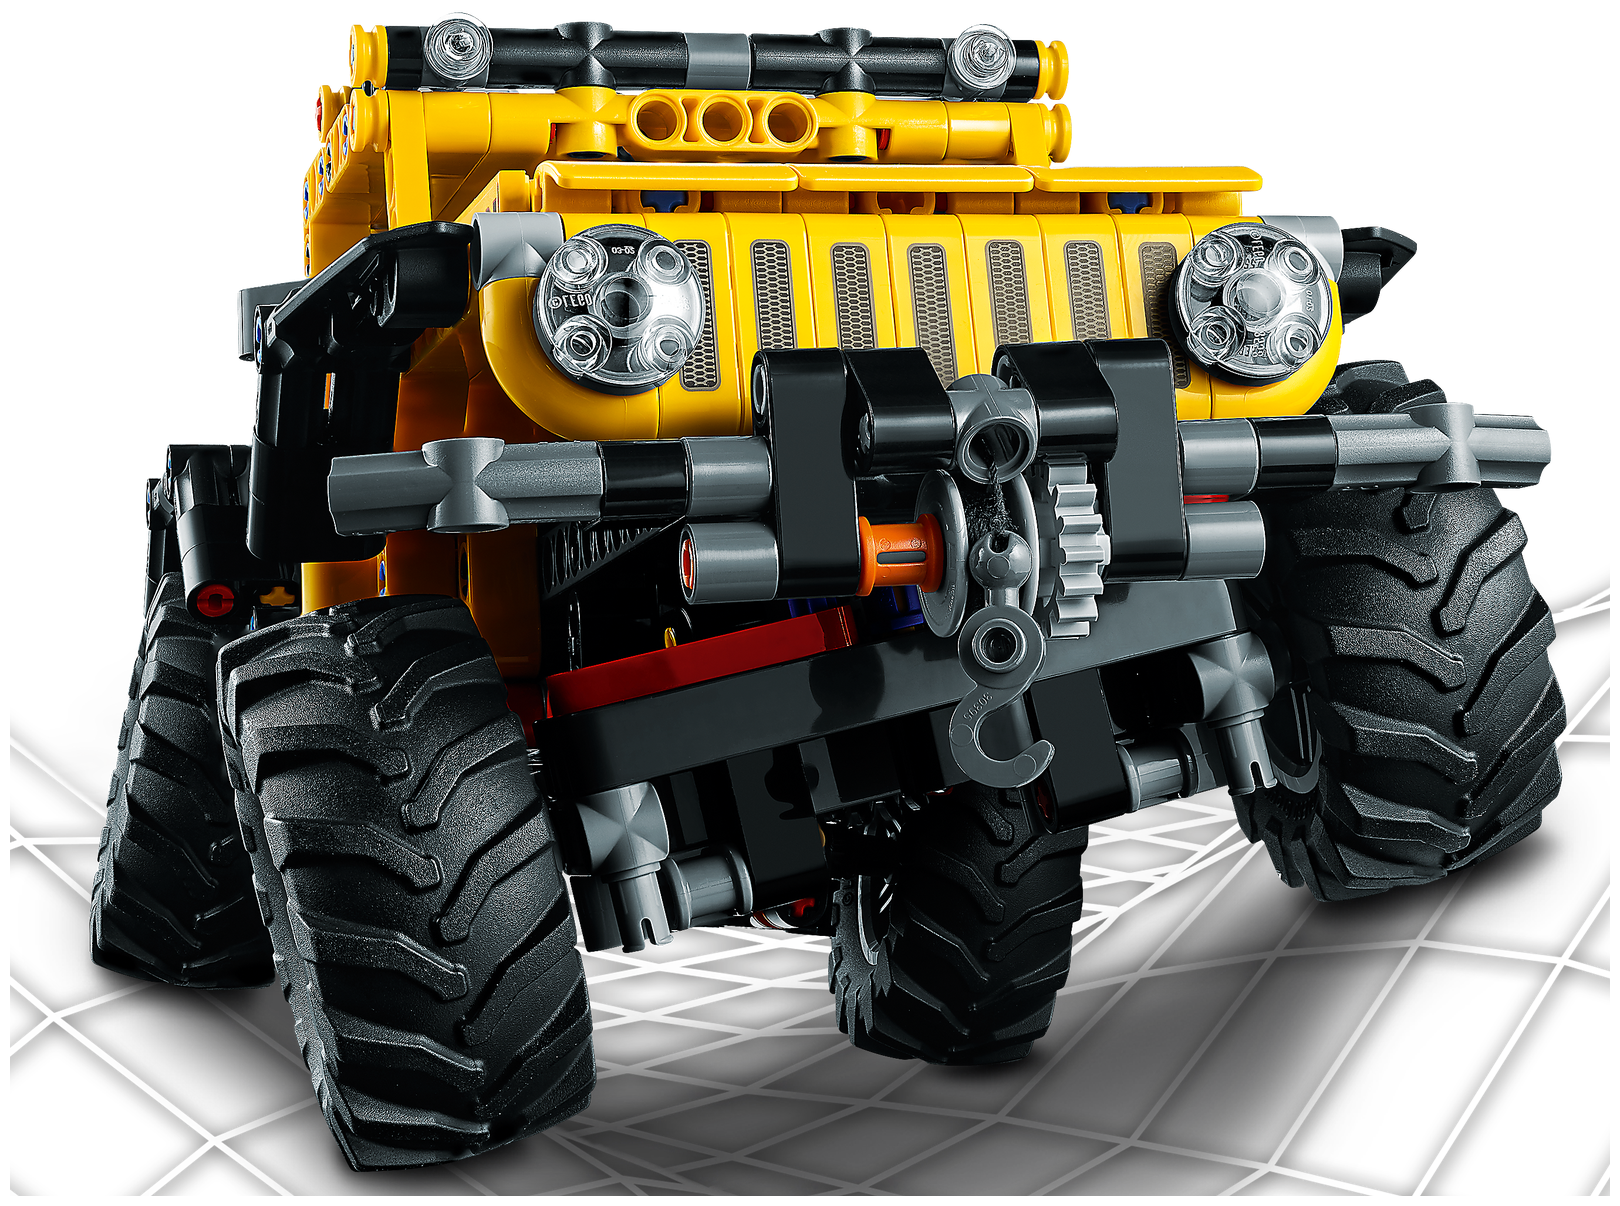 Конструктор LEGO 42122 Technic Jeep Wrangler Казахстан